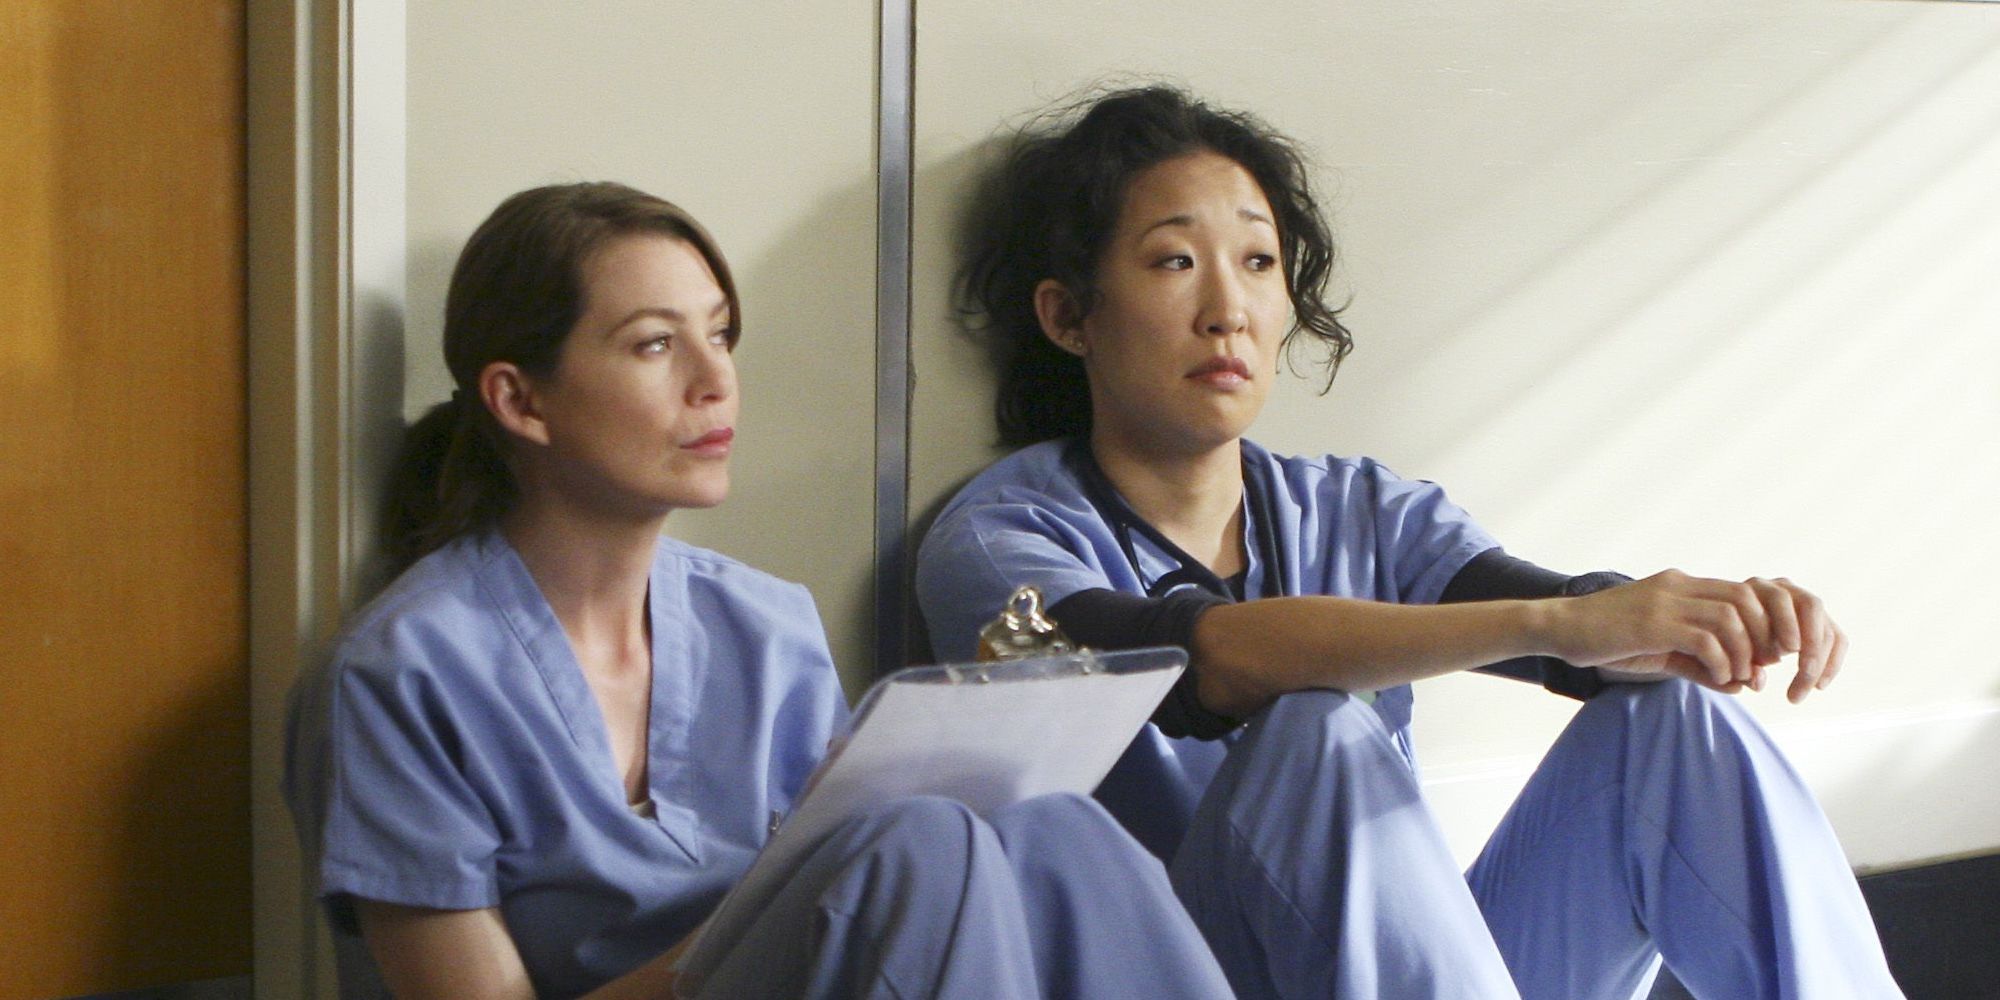 Meredith Grey and Cristina Yang in Grey's Anatomy